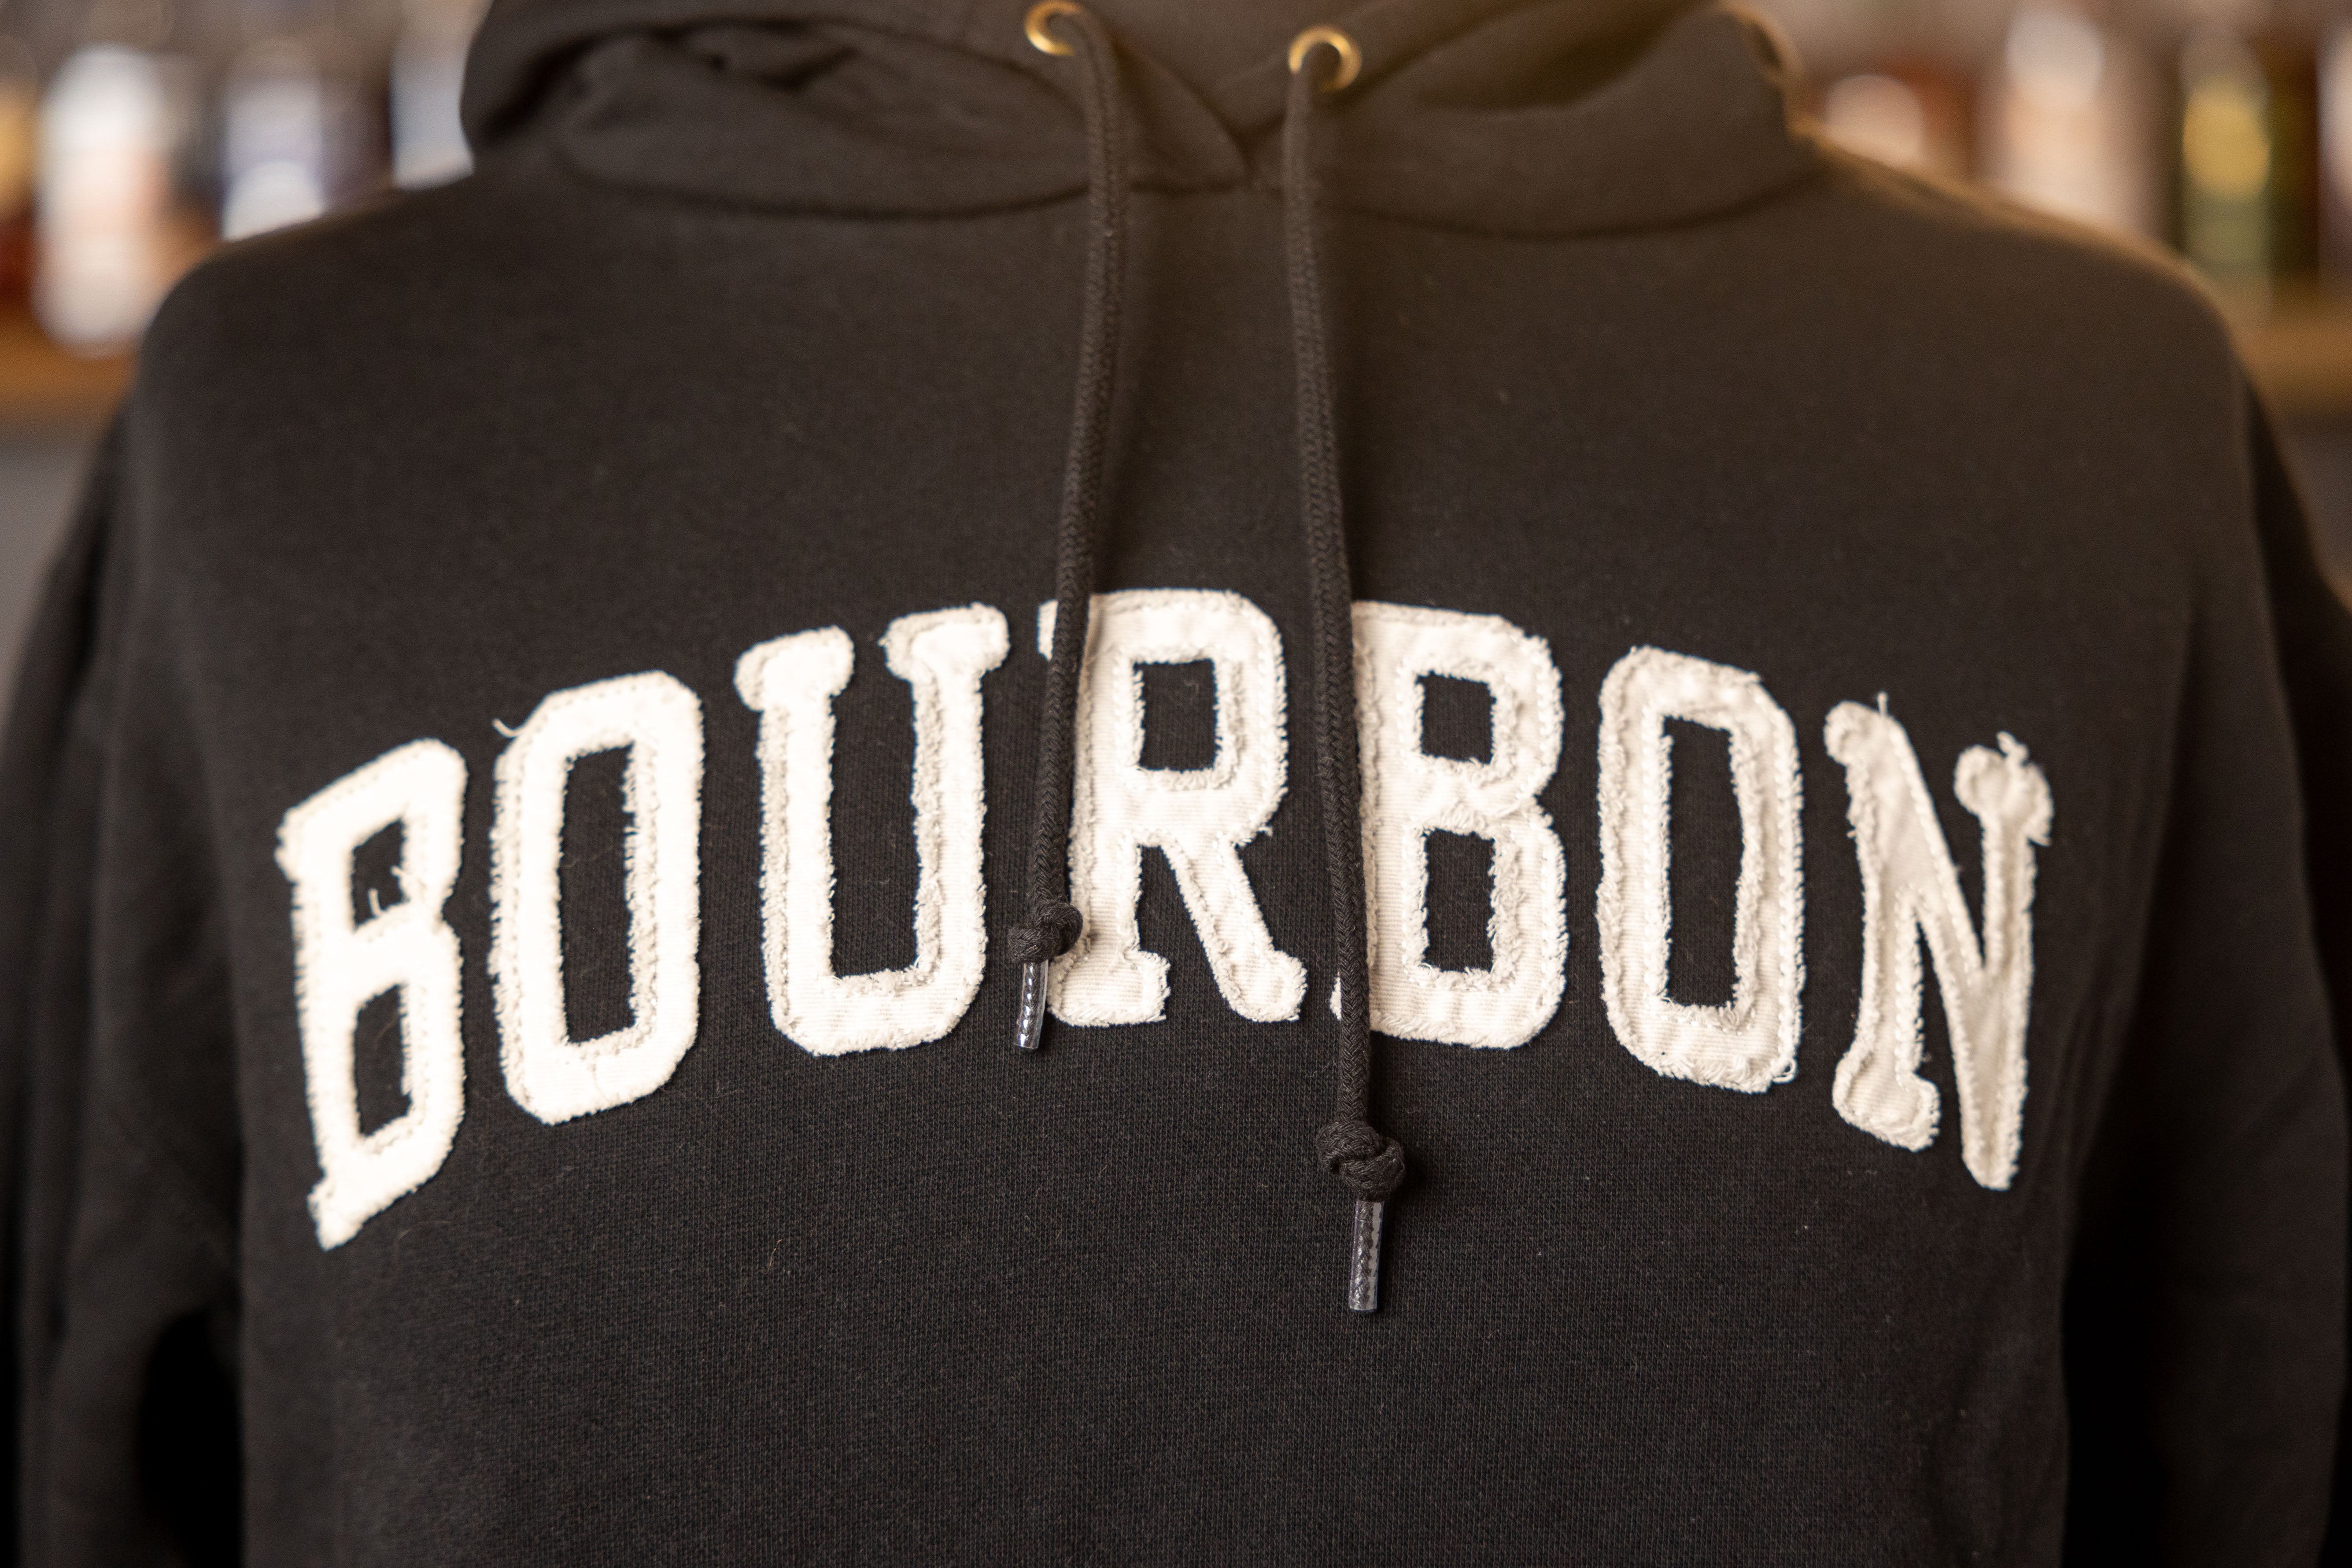 Bourbon Collegiate Hoodie